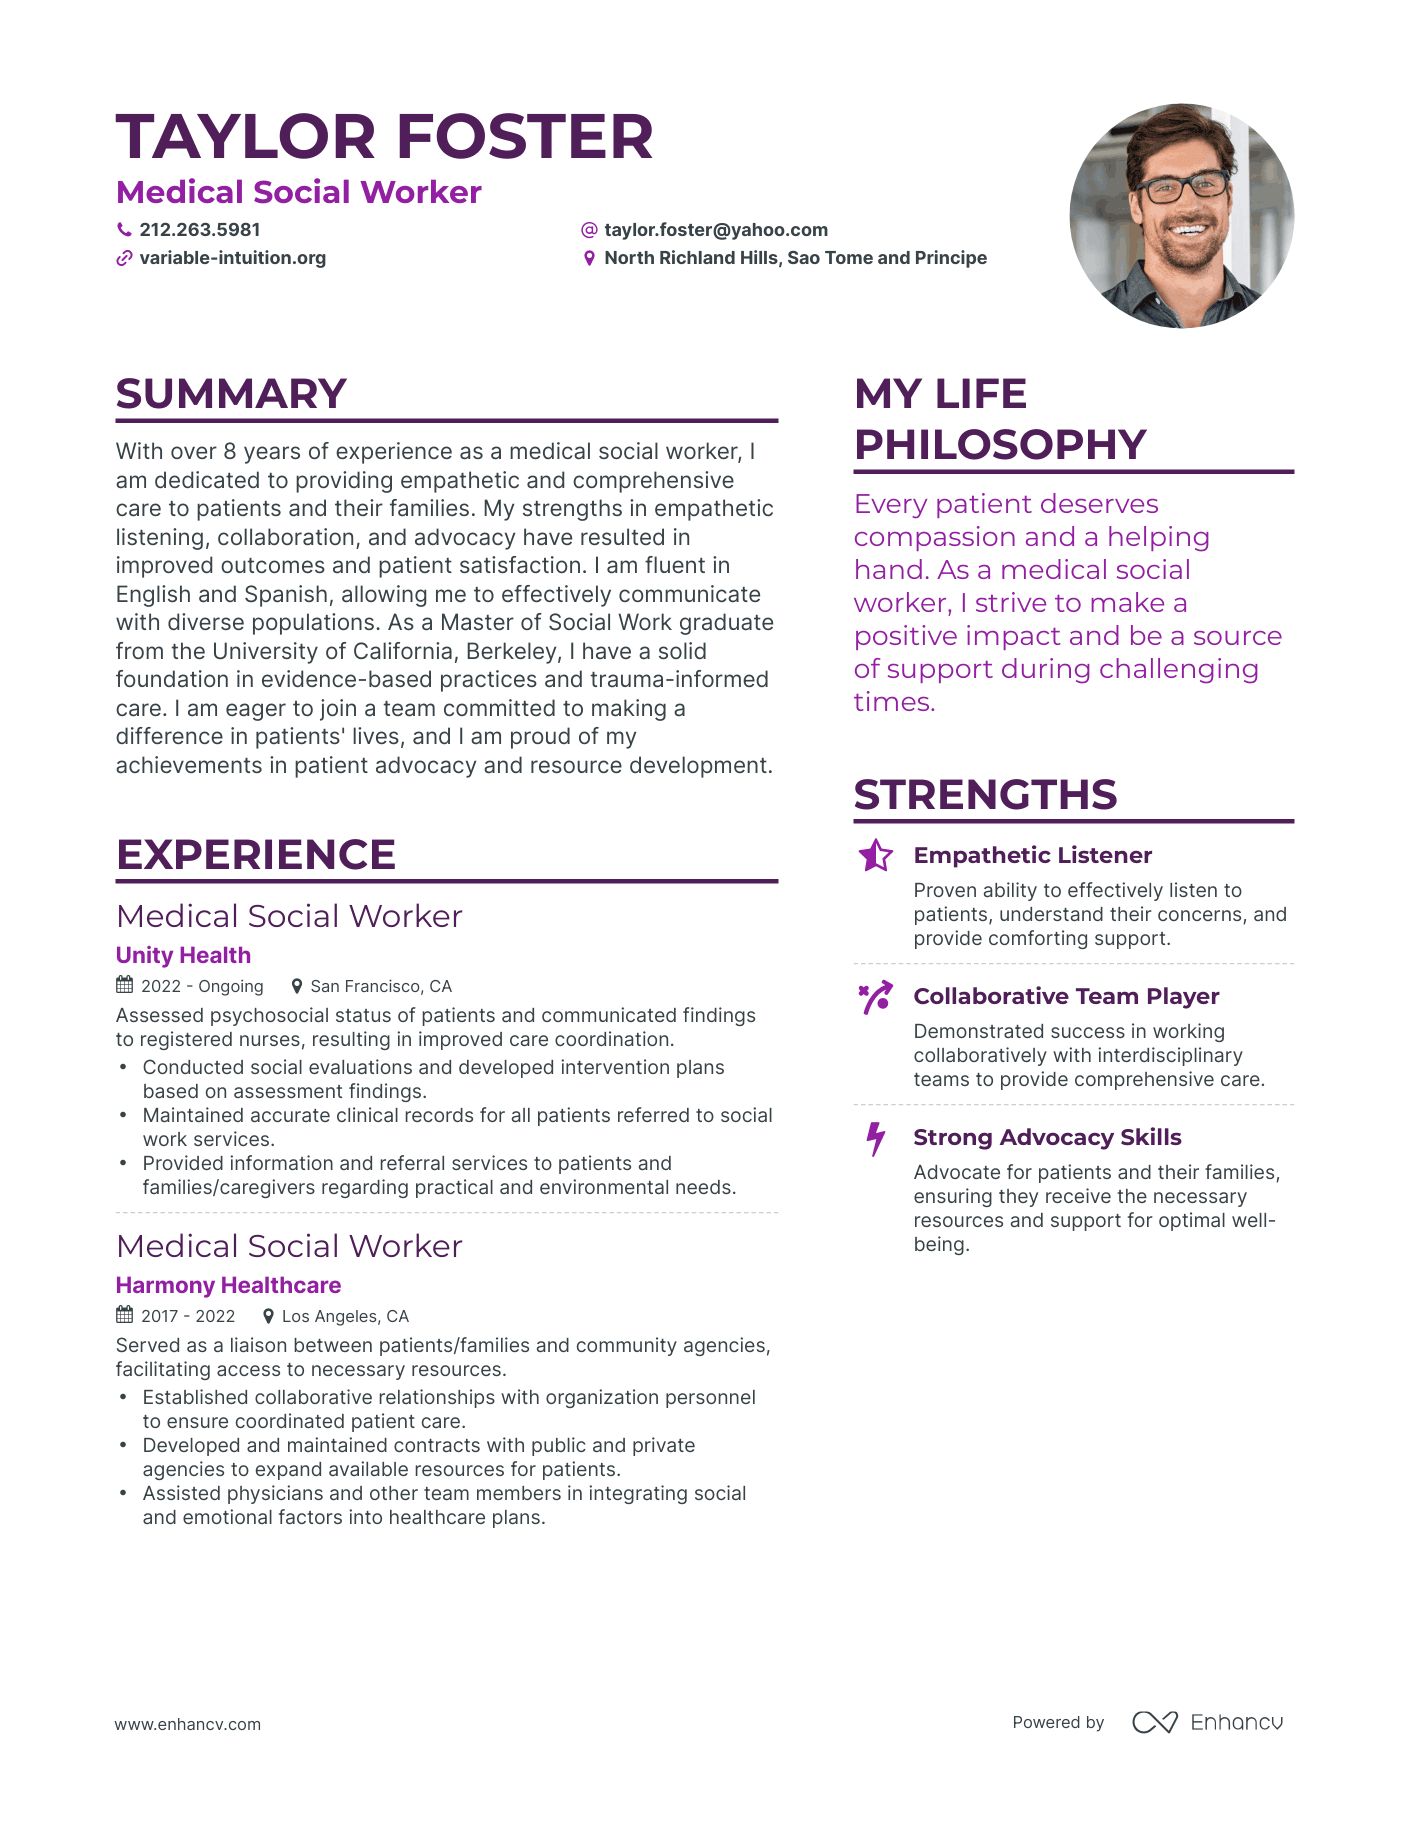 Medical Social Worker resume example